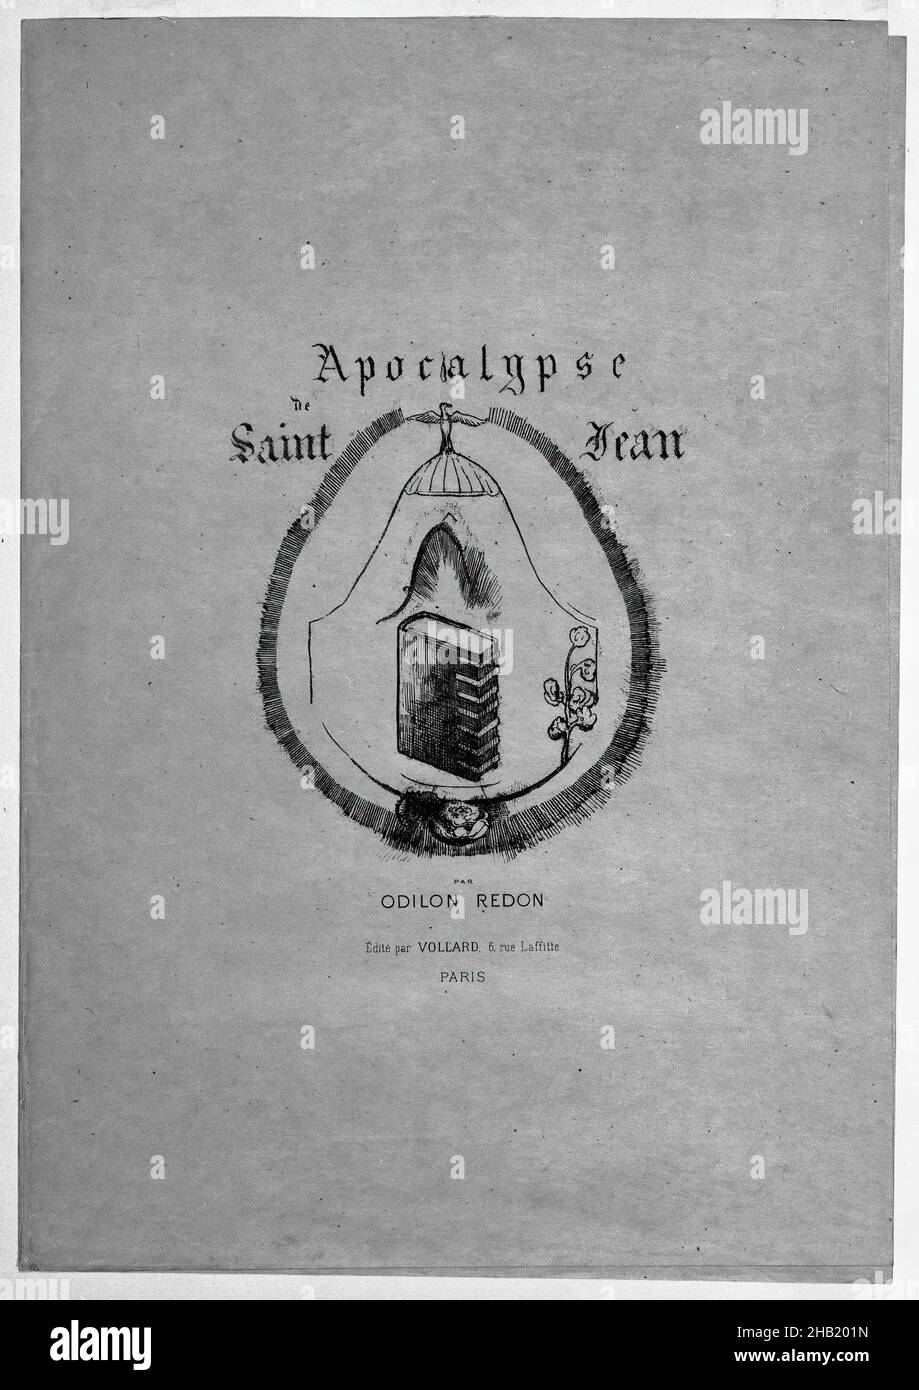 Apocalypse de saint jean hi-res stock photography and images - Alamy